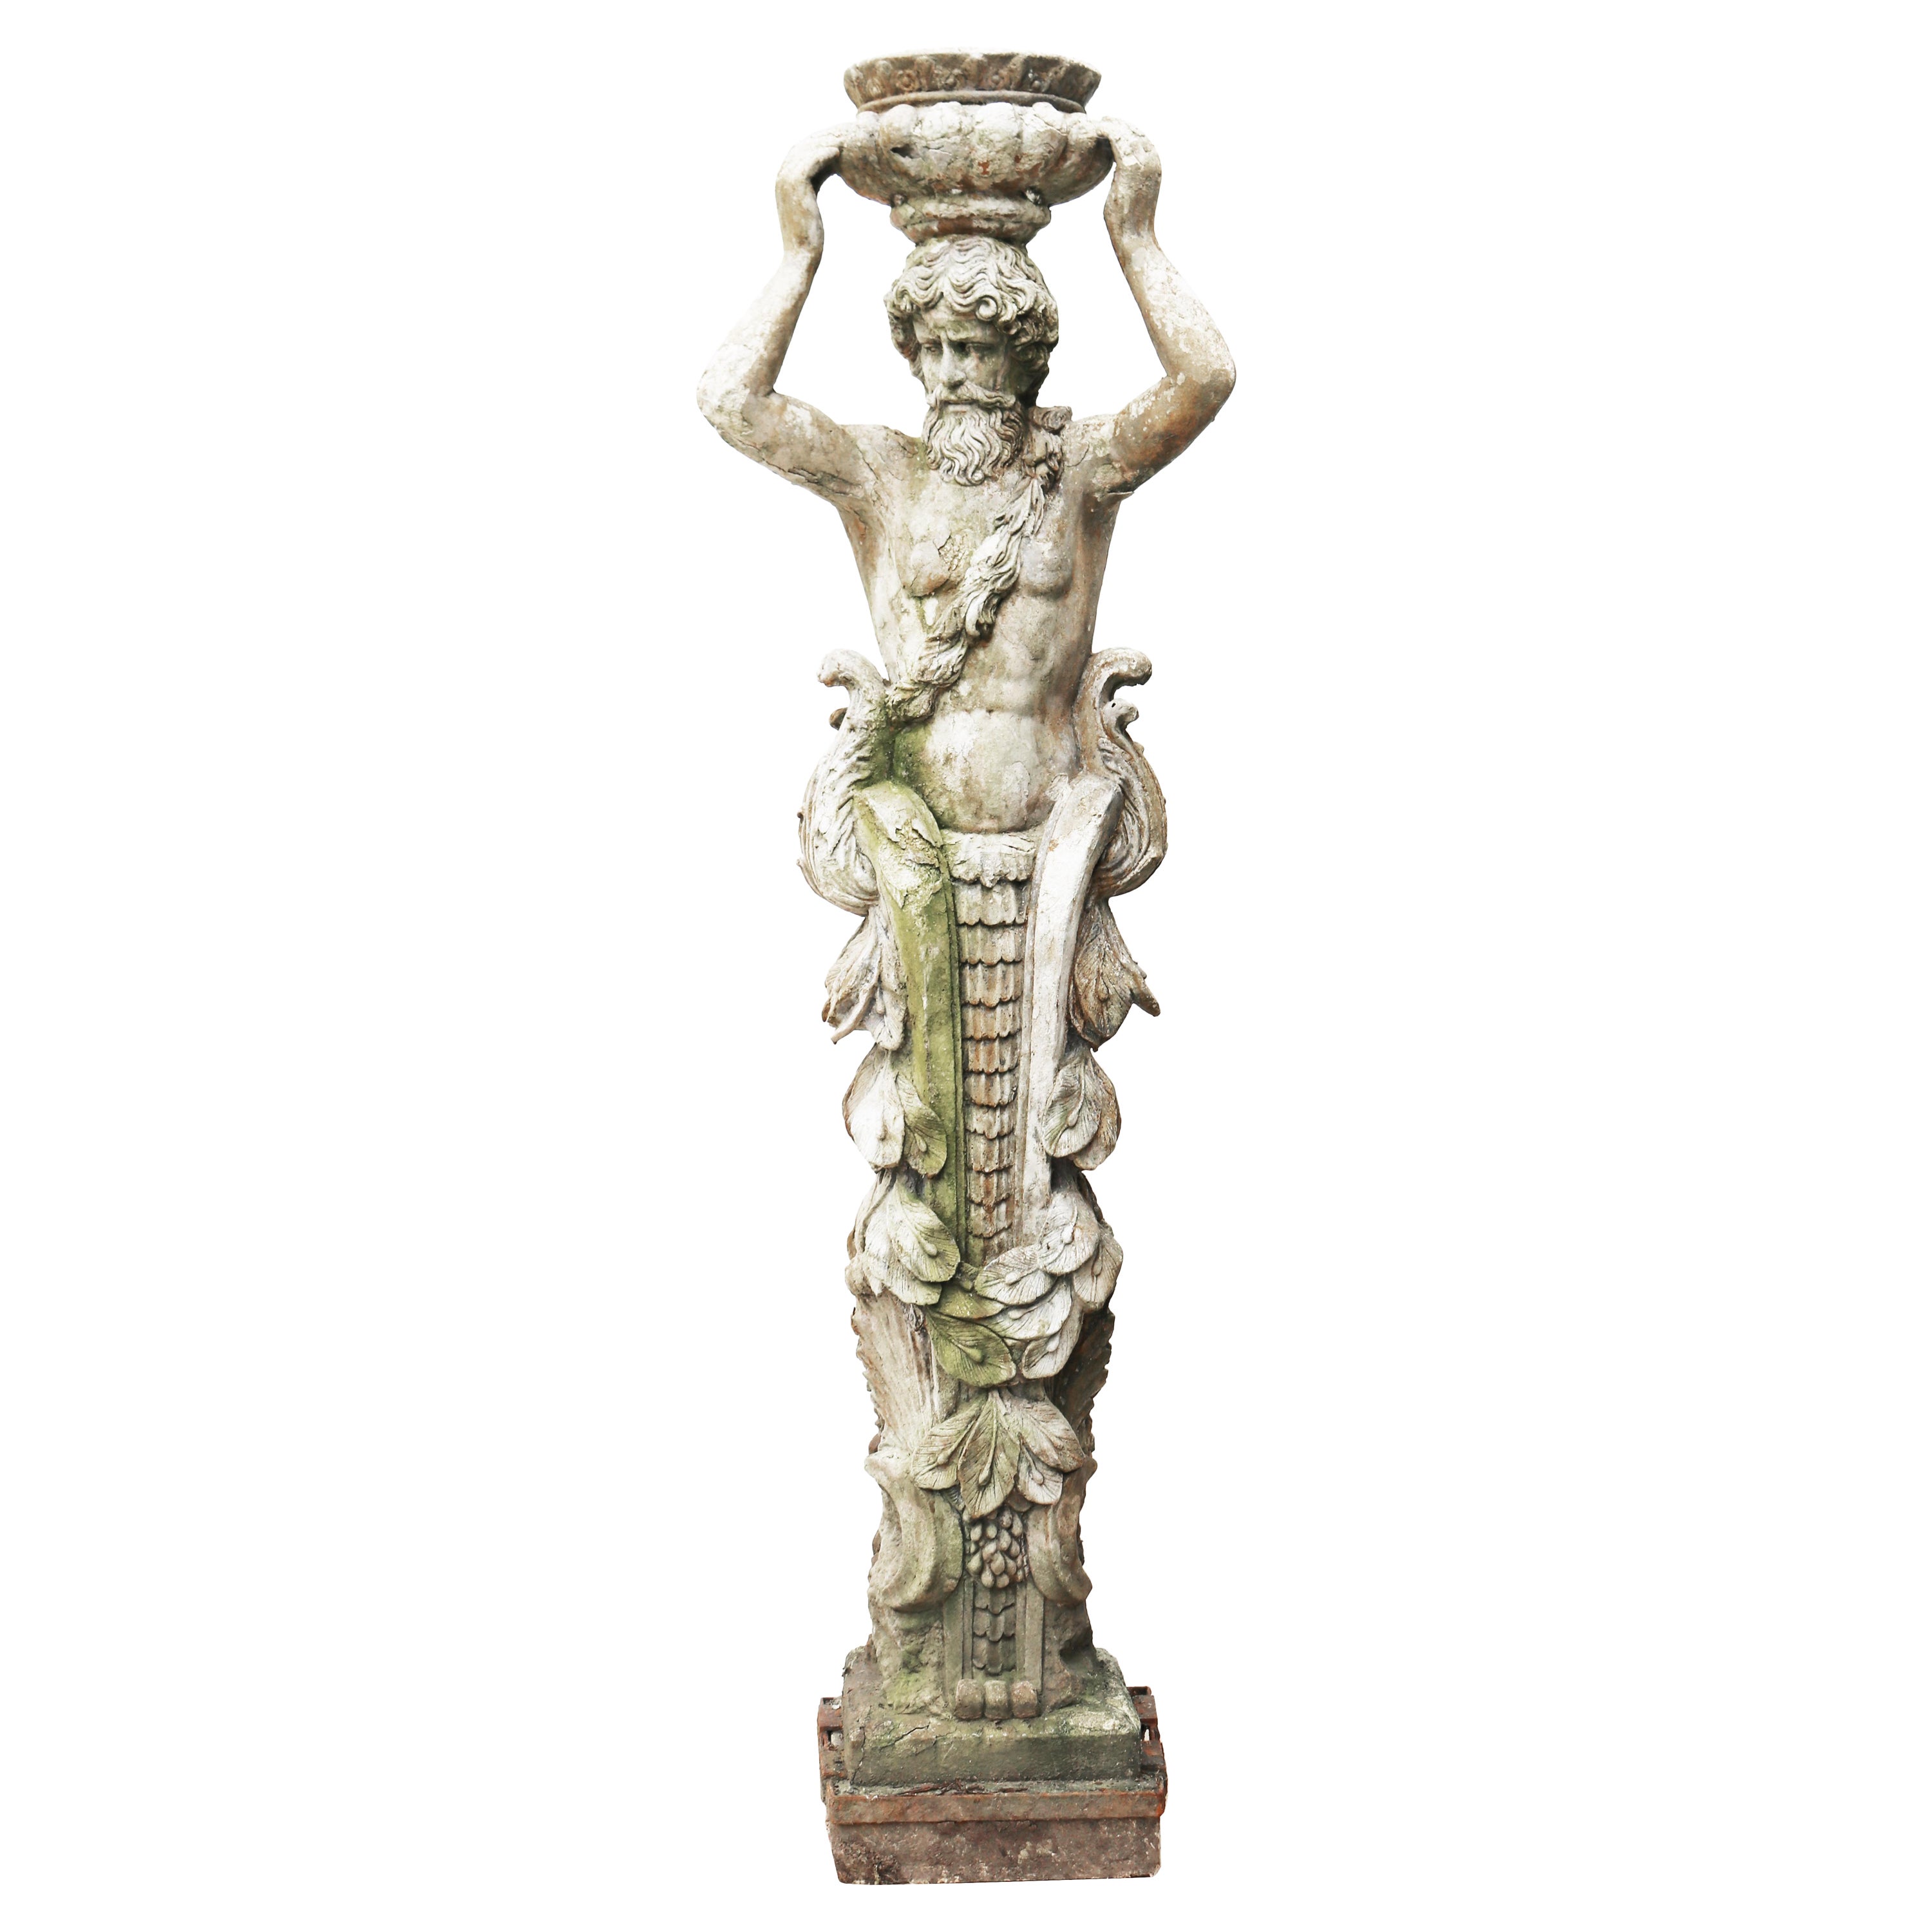 Reclaimed Herm Statue of Atlas